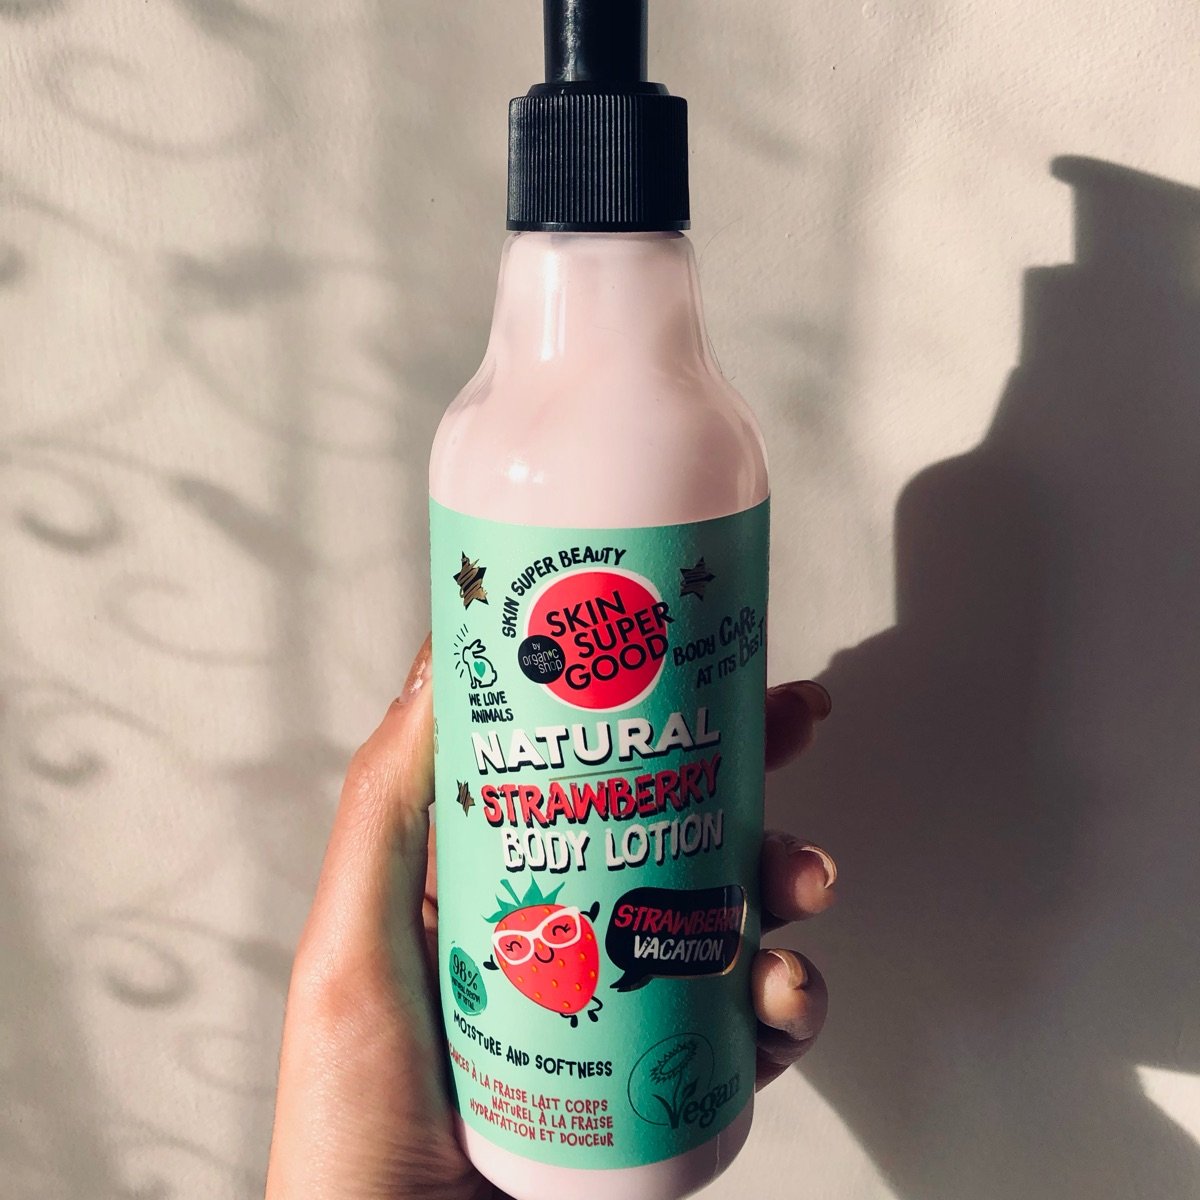 Organic shop Natural strawberry body lotion Reviews | abillion